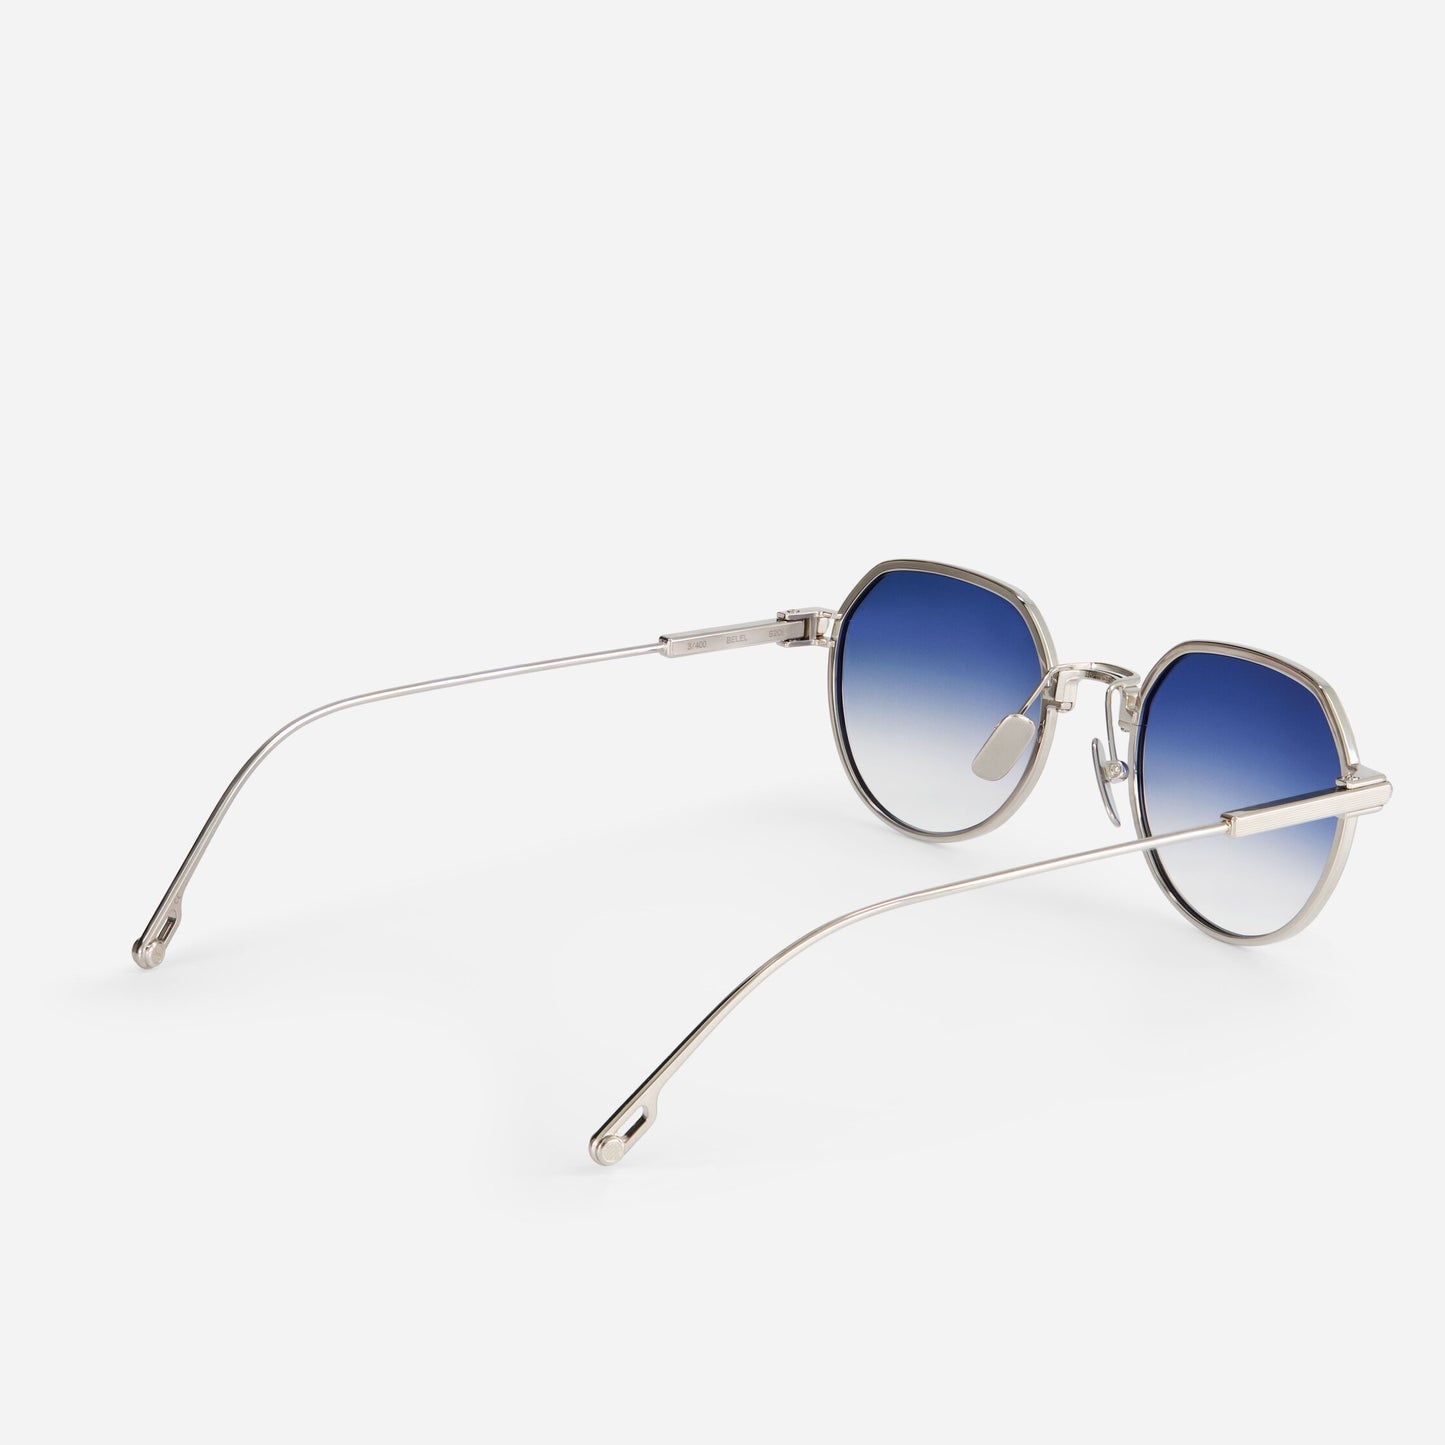 SATO sunglasses I Belel collection. Blue gradient lenses w/ palladium - Belel S201